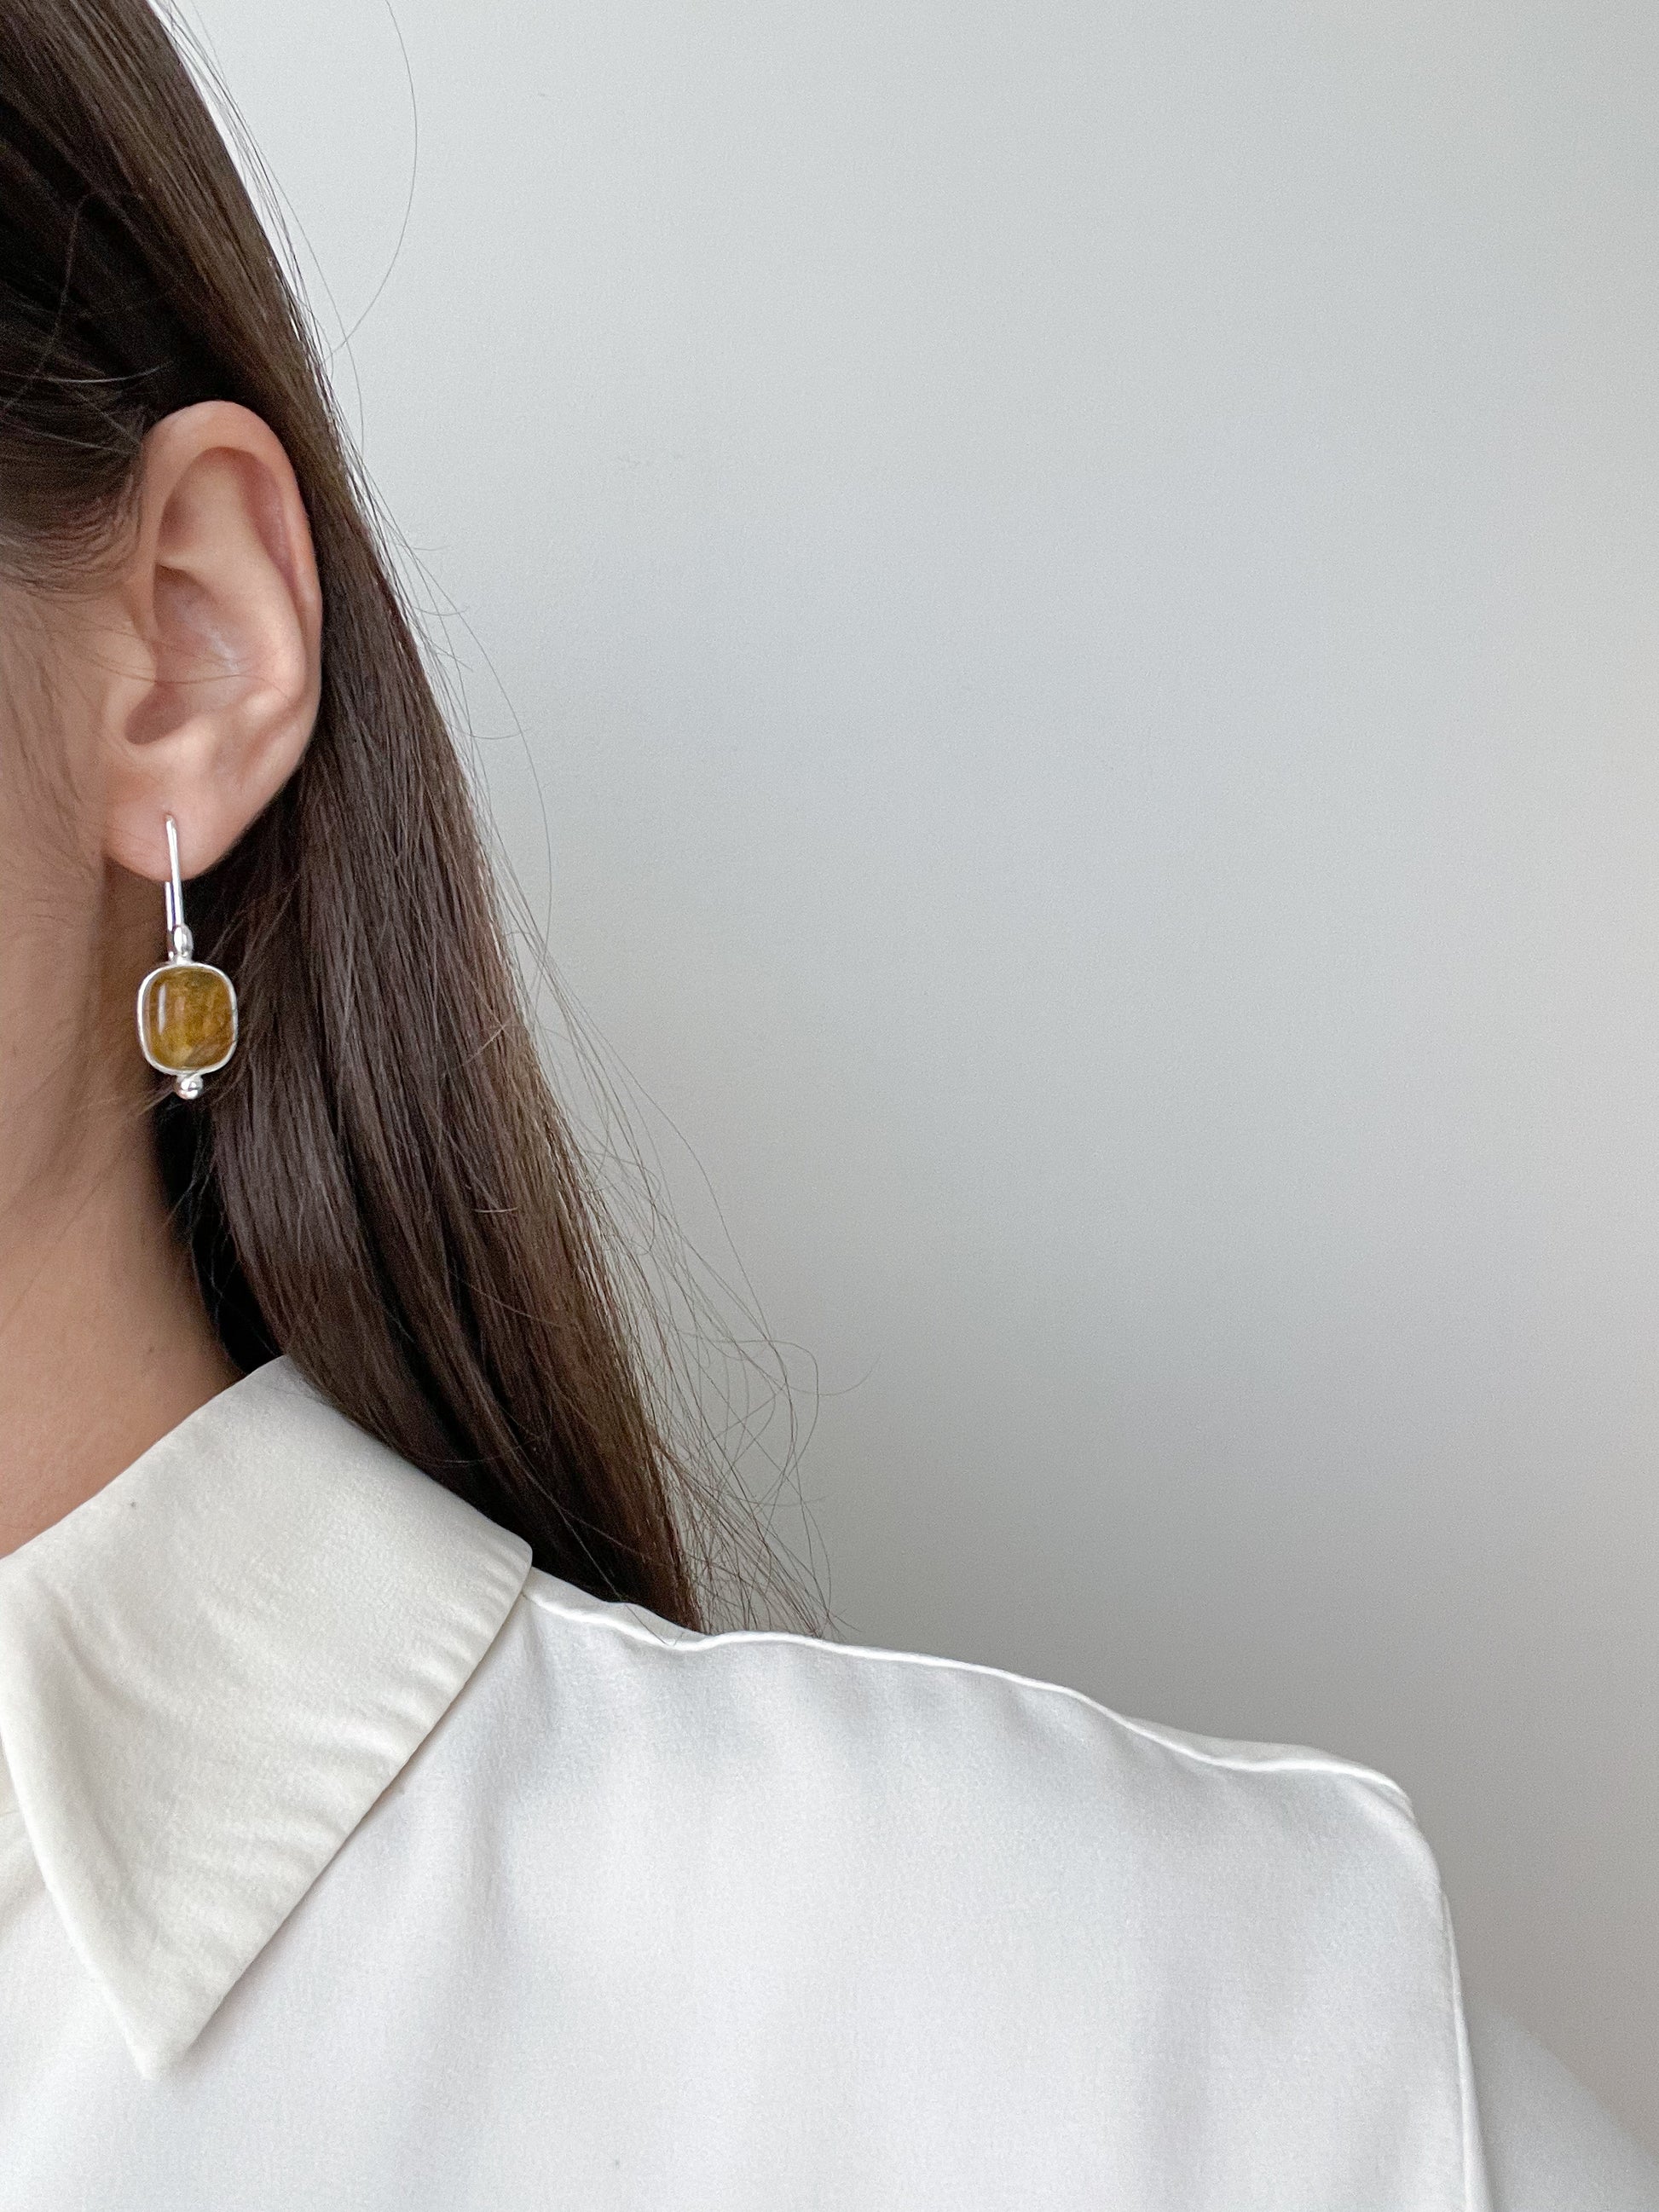 Honey amber dangle earrings - Sterling silver - Hook earrings collection